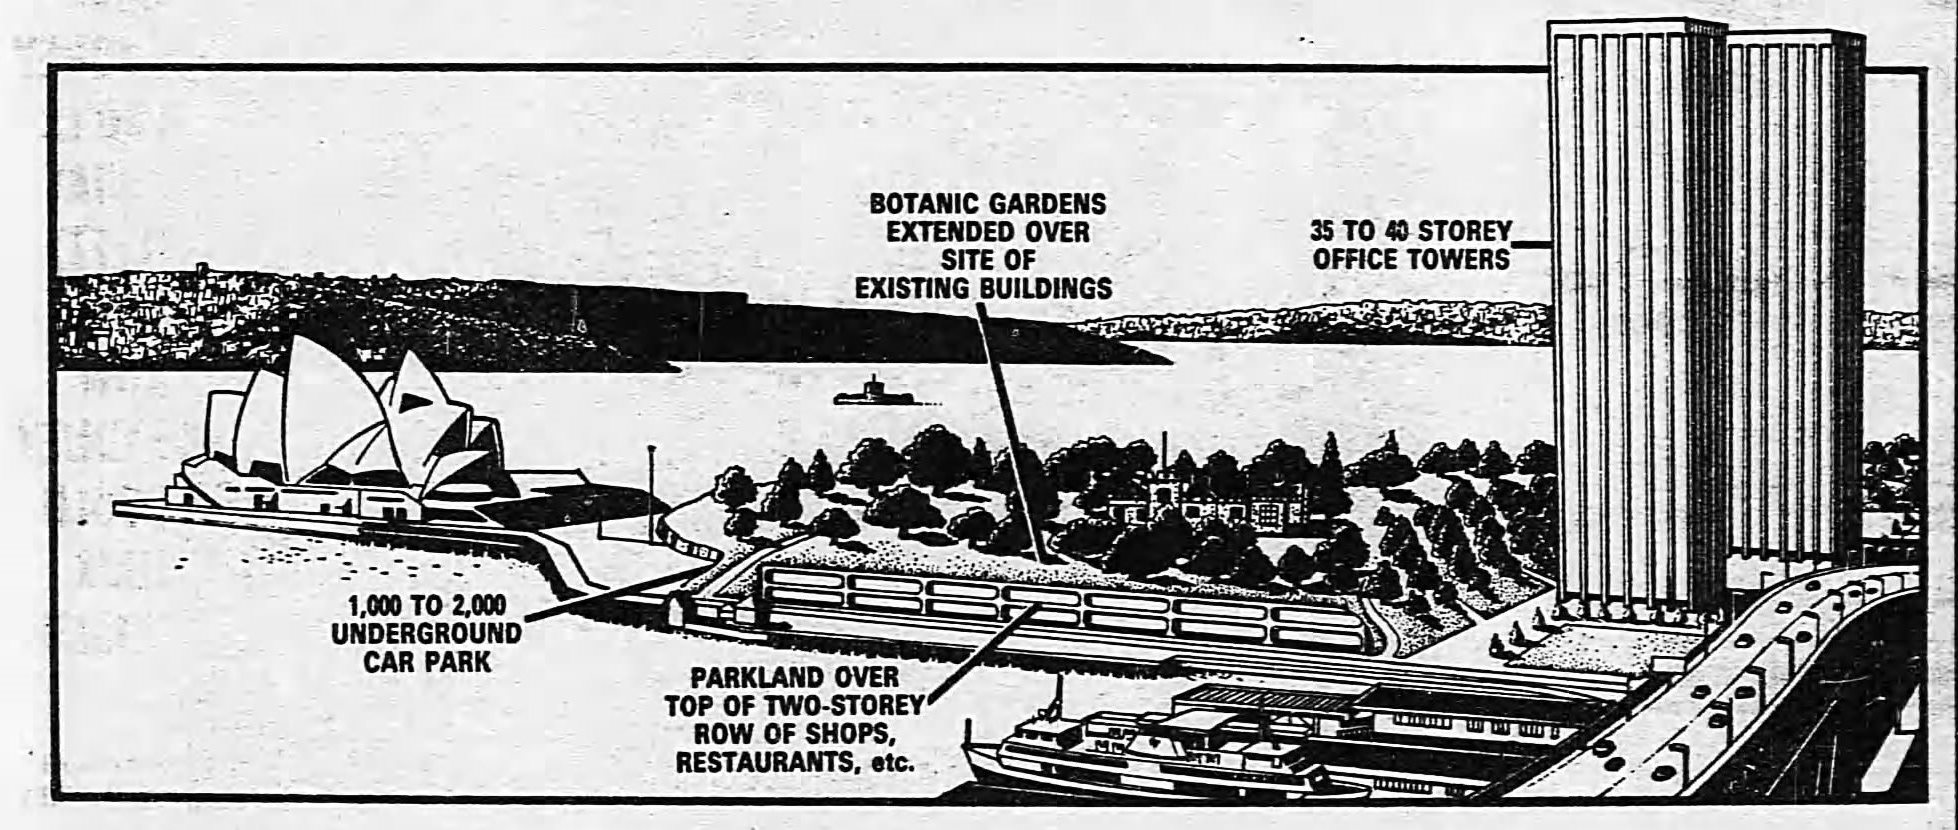 East Circular Quay September 16 1984 Sun Herald 4-5 enlarged 1